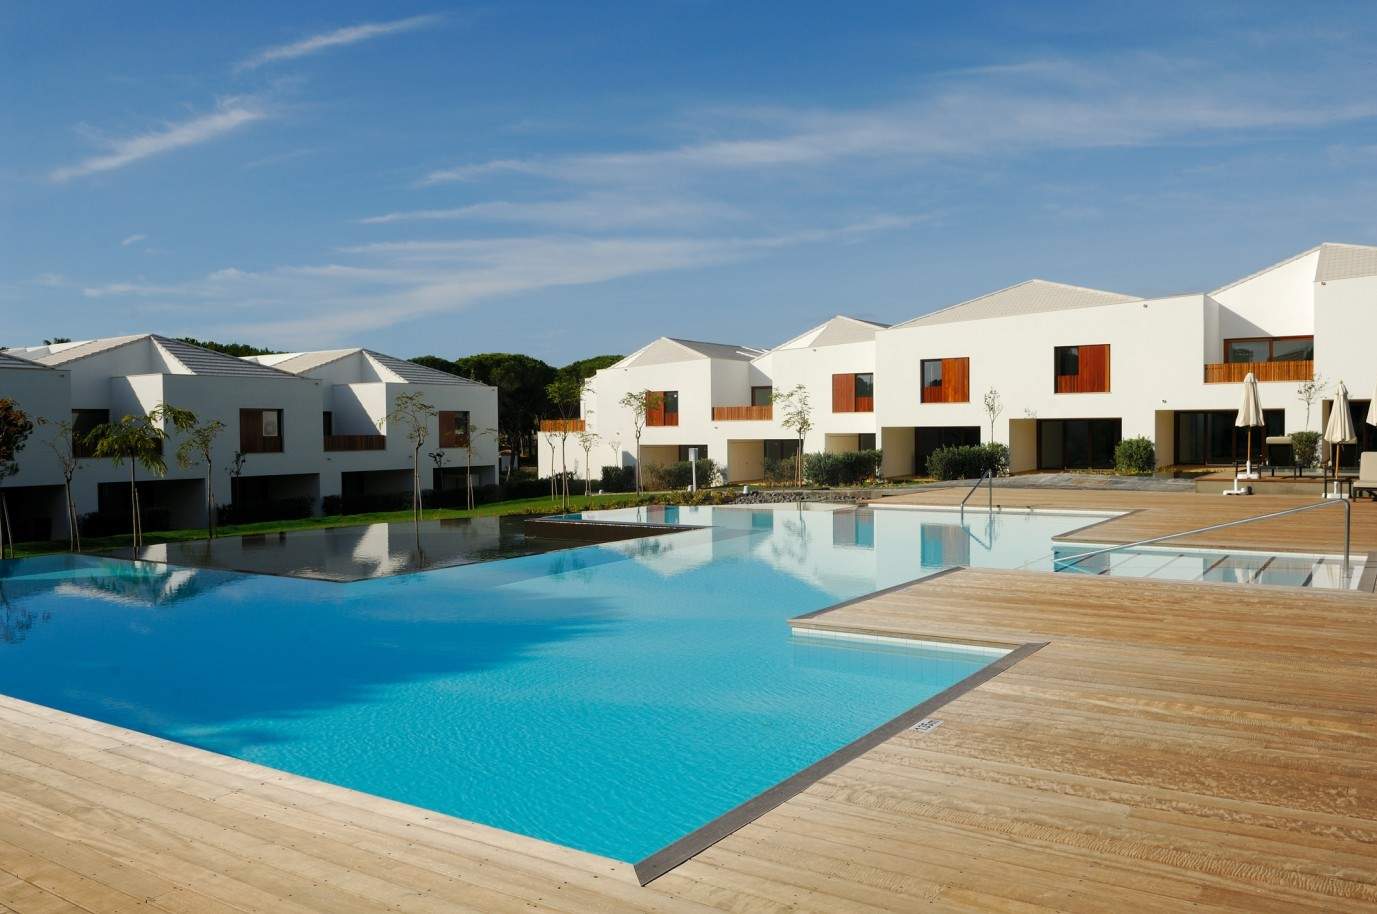 Venta de vivienda dúplex en Pine Cliffs, Albufeira, Algarve, Portugal_83075